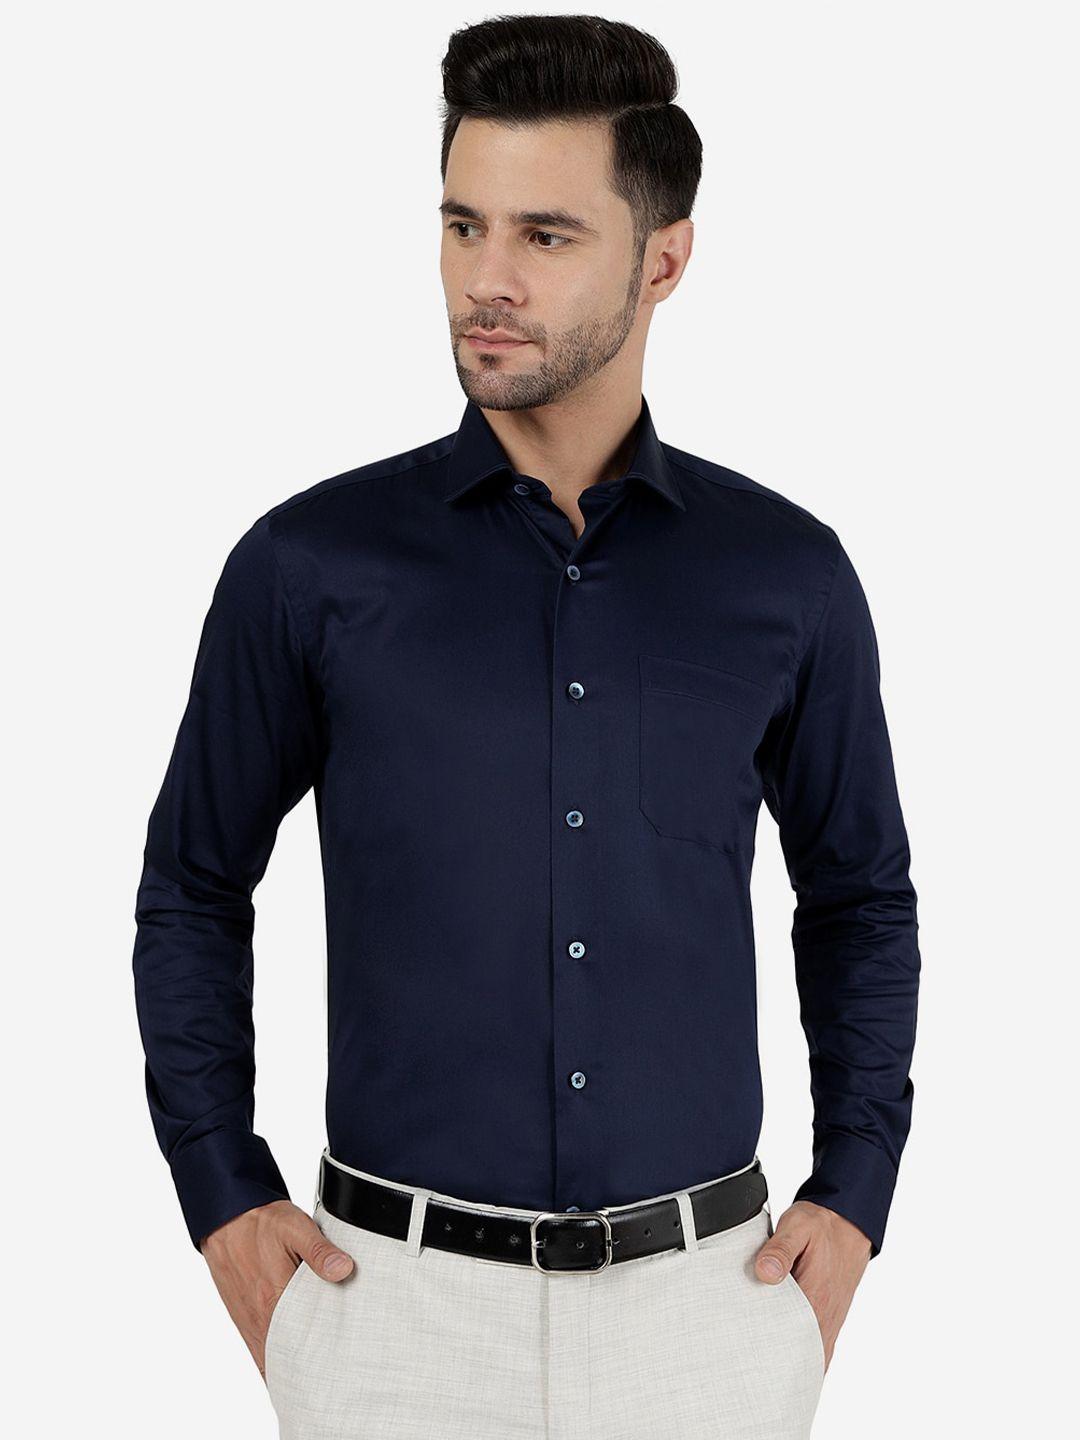 metal spread collar cotton slim fit formal shirt